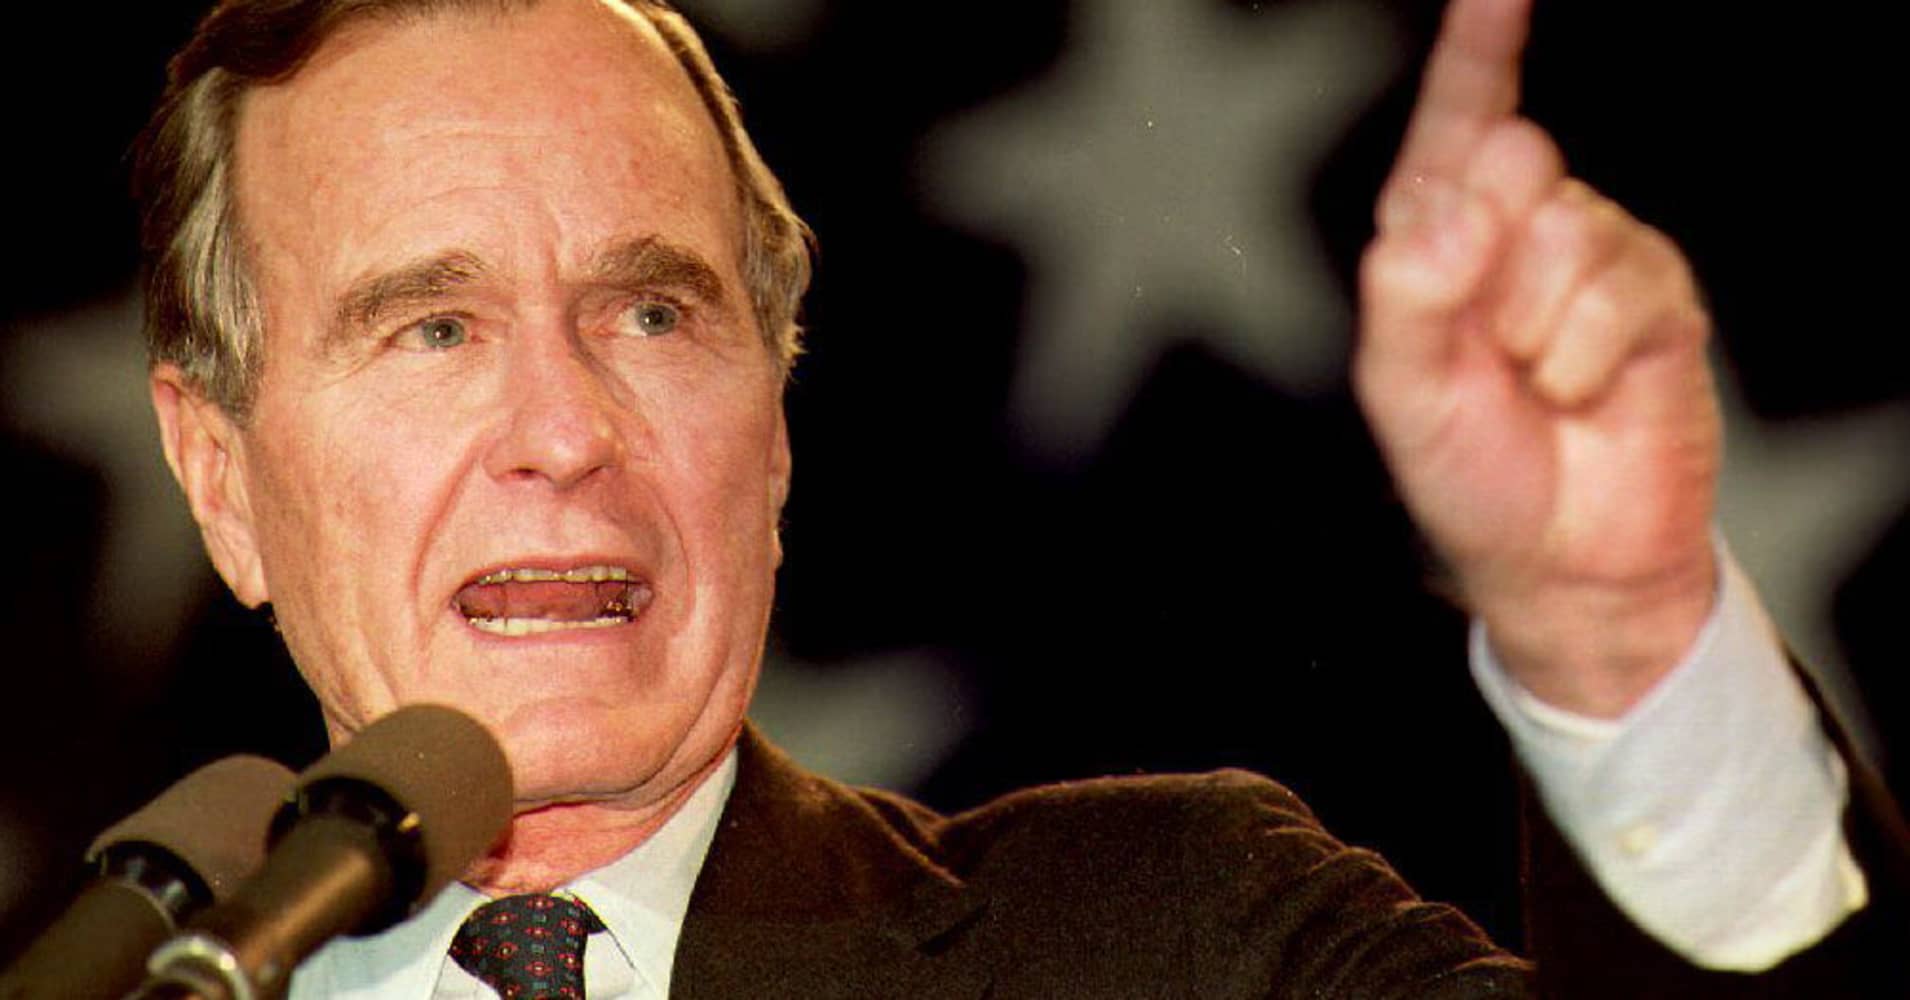 Then-President George H.W. Bush campaigning on Nov. 1, 1992.